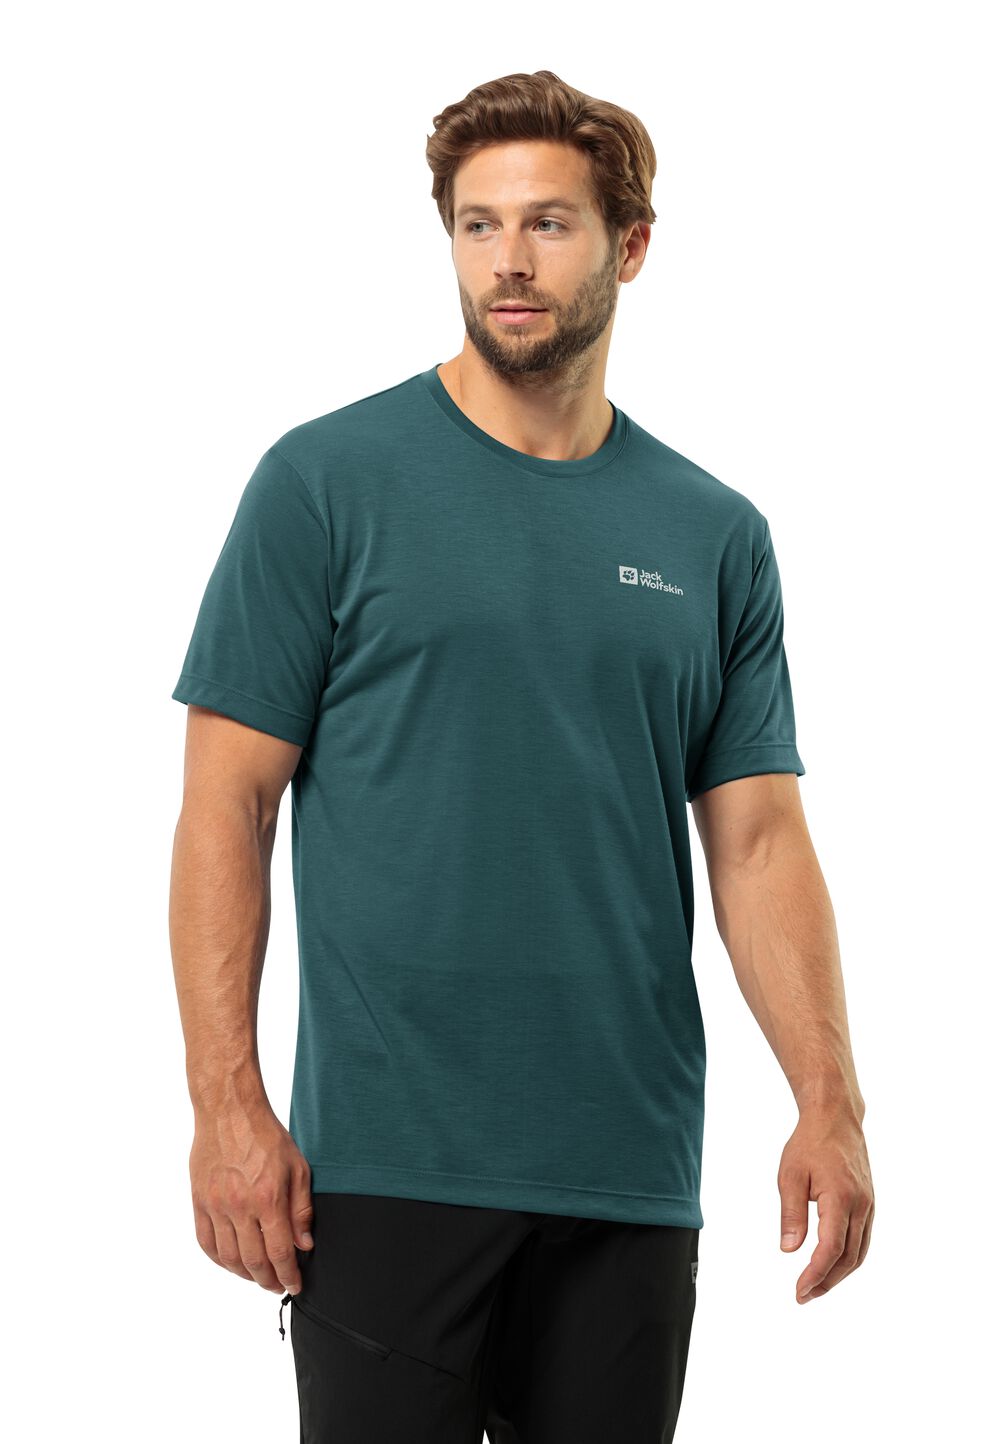 Jack Wolfskin Vonnan S S T-Shirt Men Functioneel shirt Heren 3XL emerald